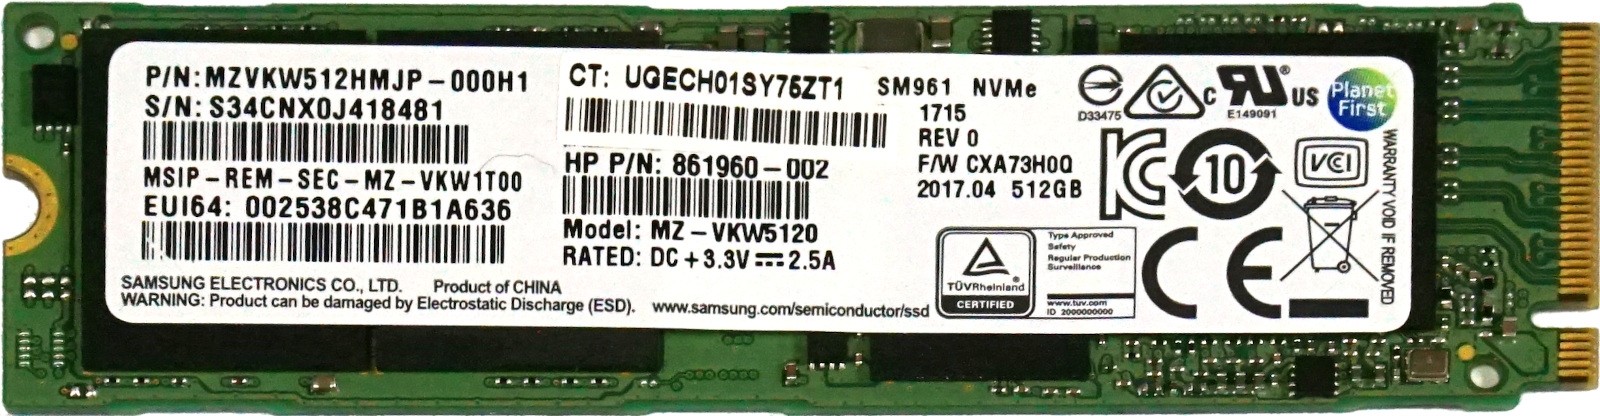 HP (861960-002) 512GB Samsung SM961 NVMe (M.2 2280) SSD